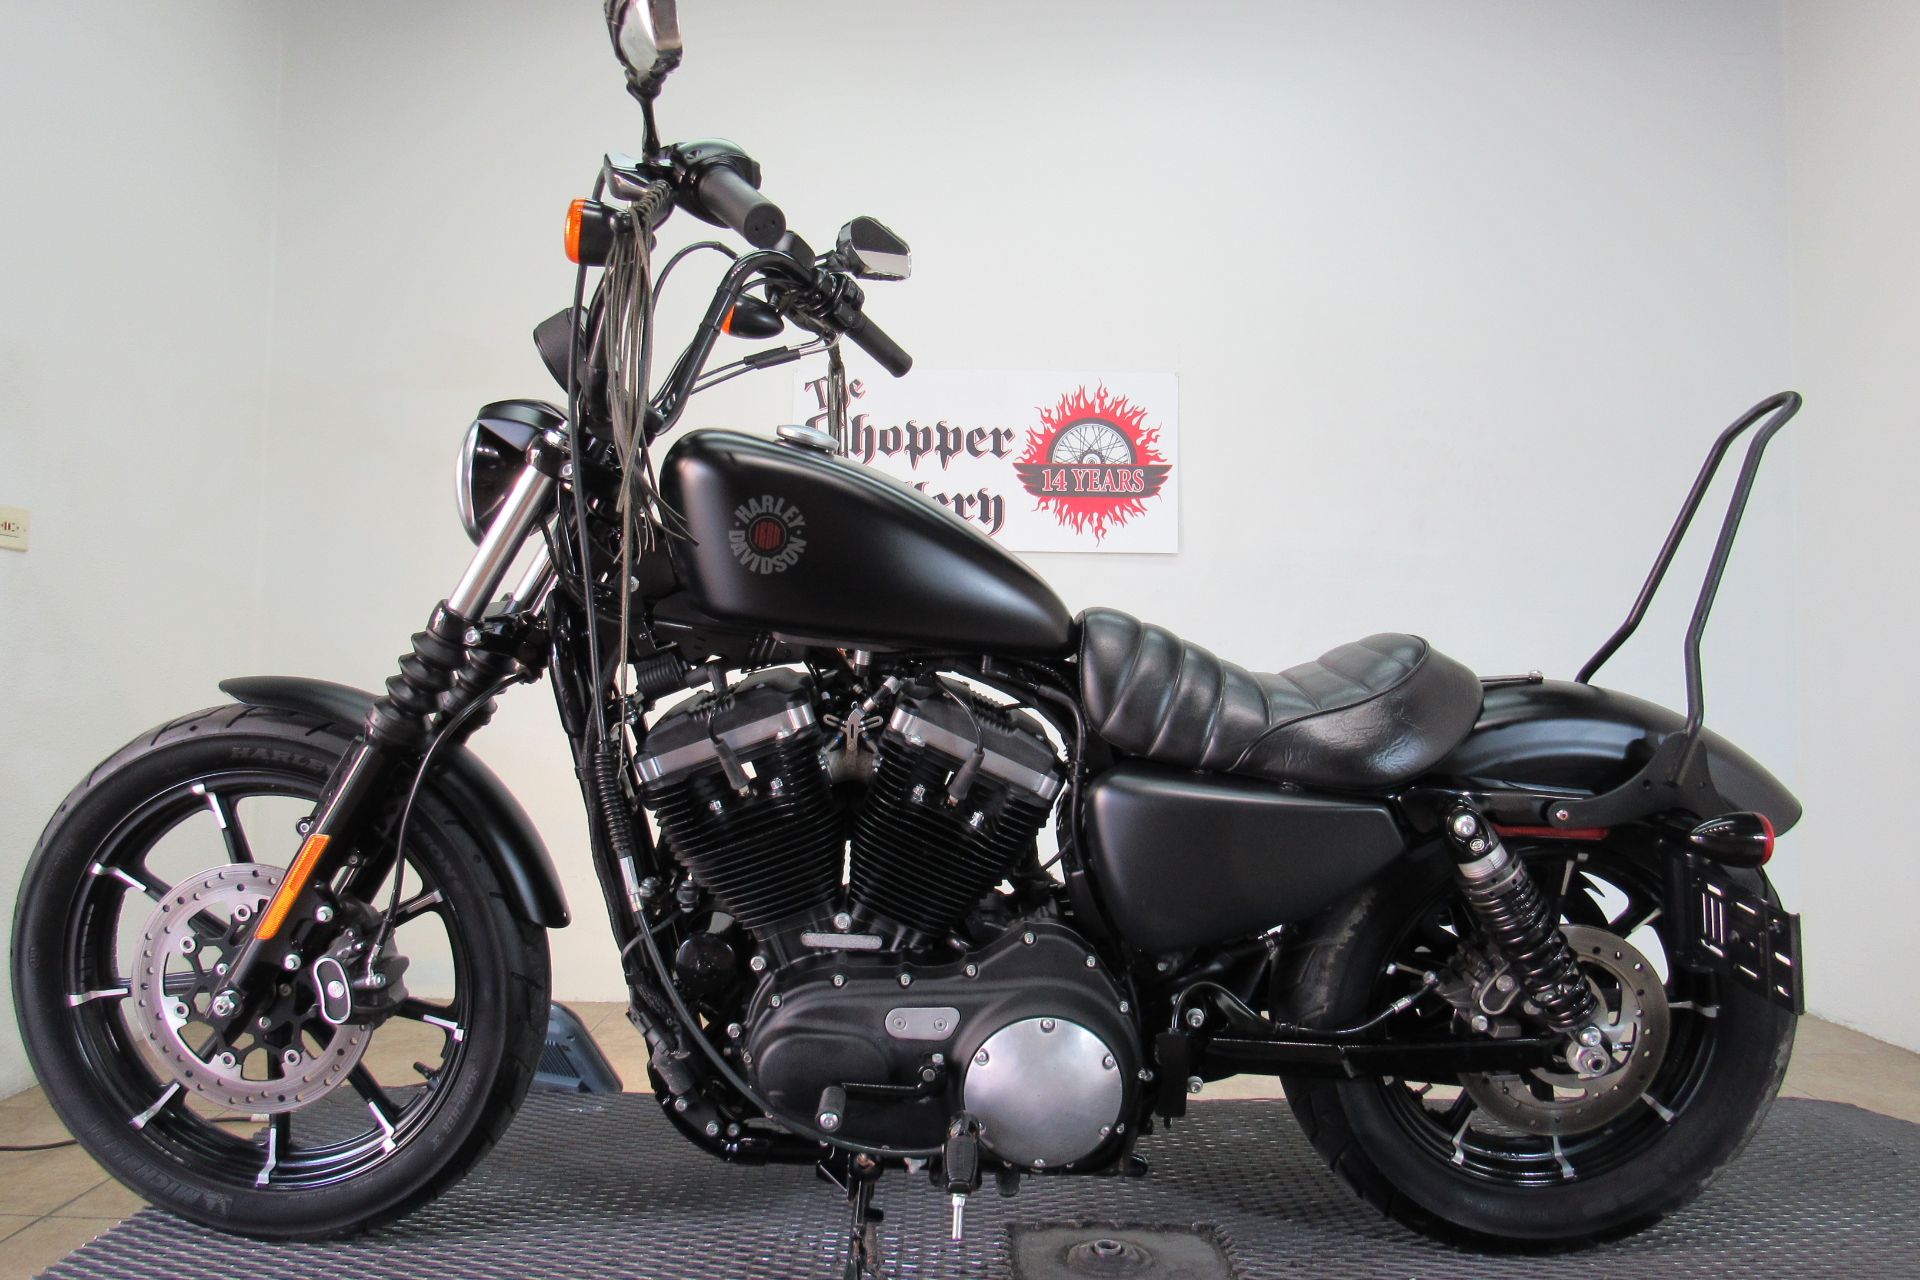 2019 Harley-Davidson Iron 883™ in Temecula, California - Photo 2